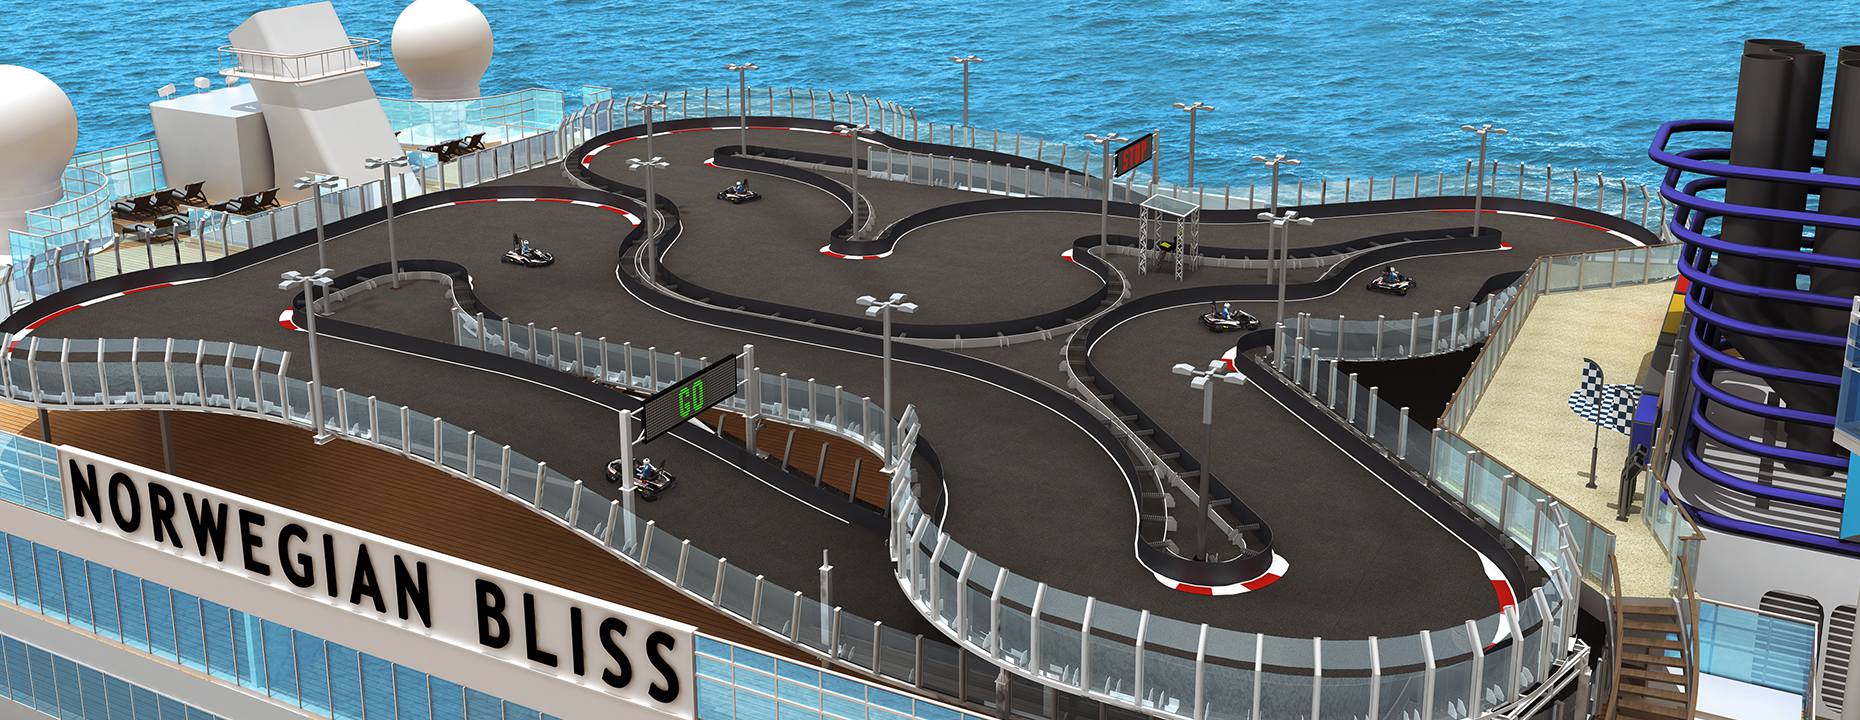 racing track